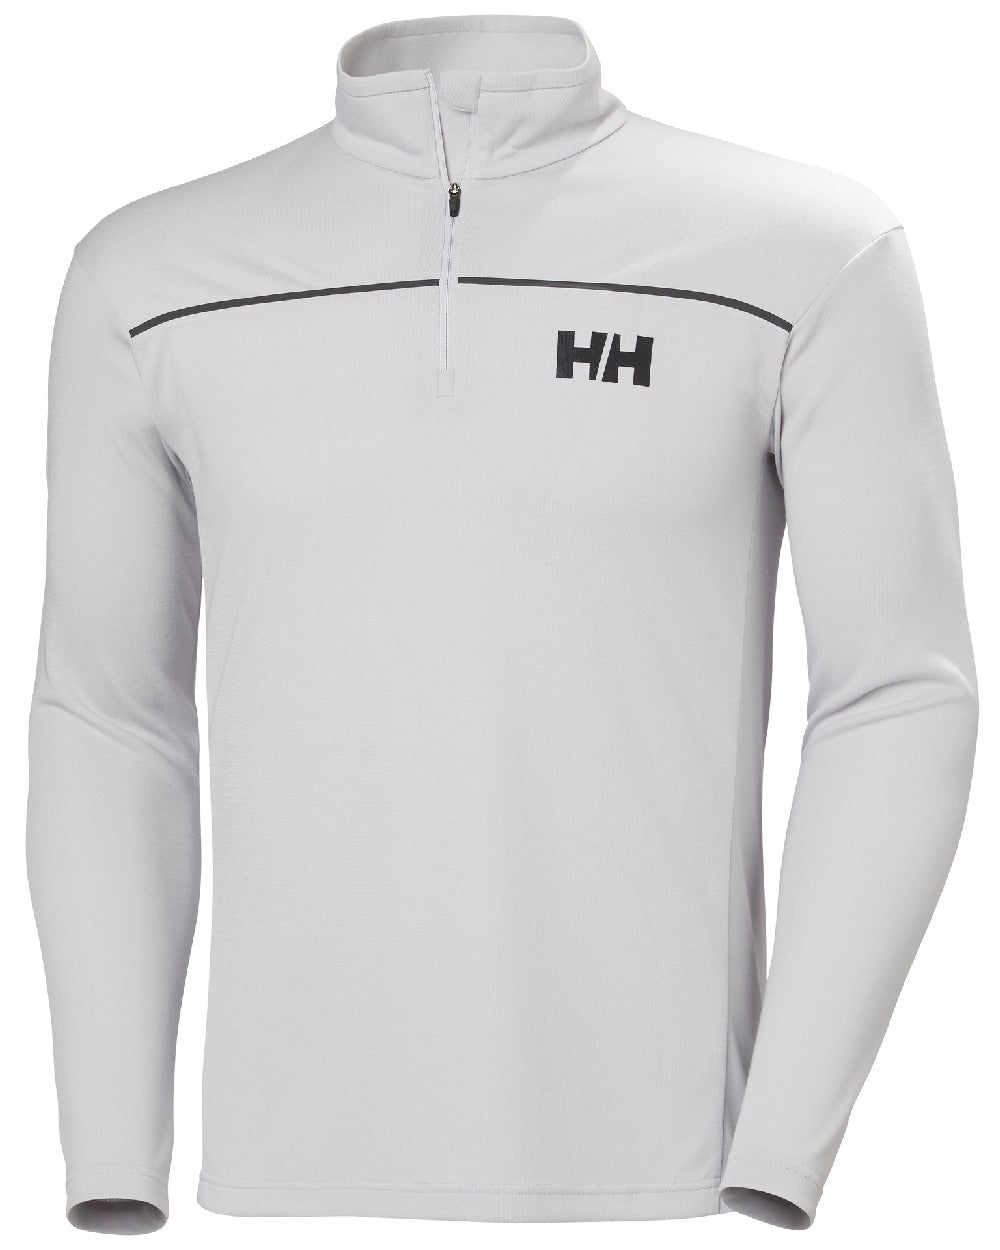 Grey Fog coloured Helly Hansen Mens HP Half Zip Pullover Shirt on white background 